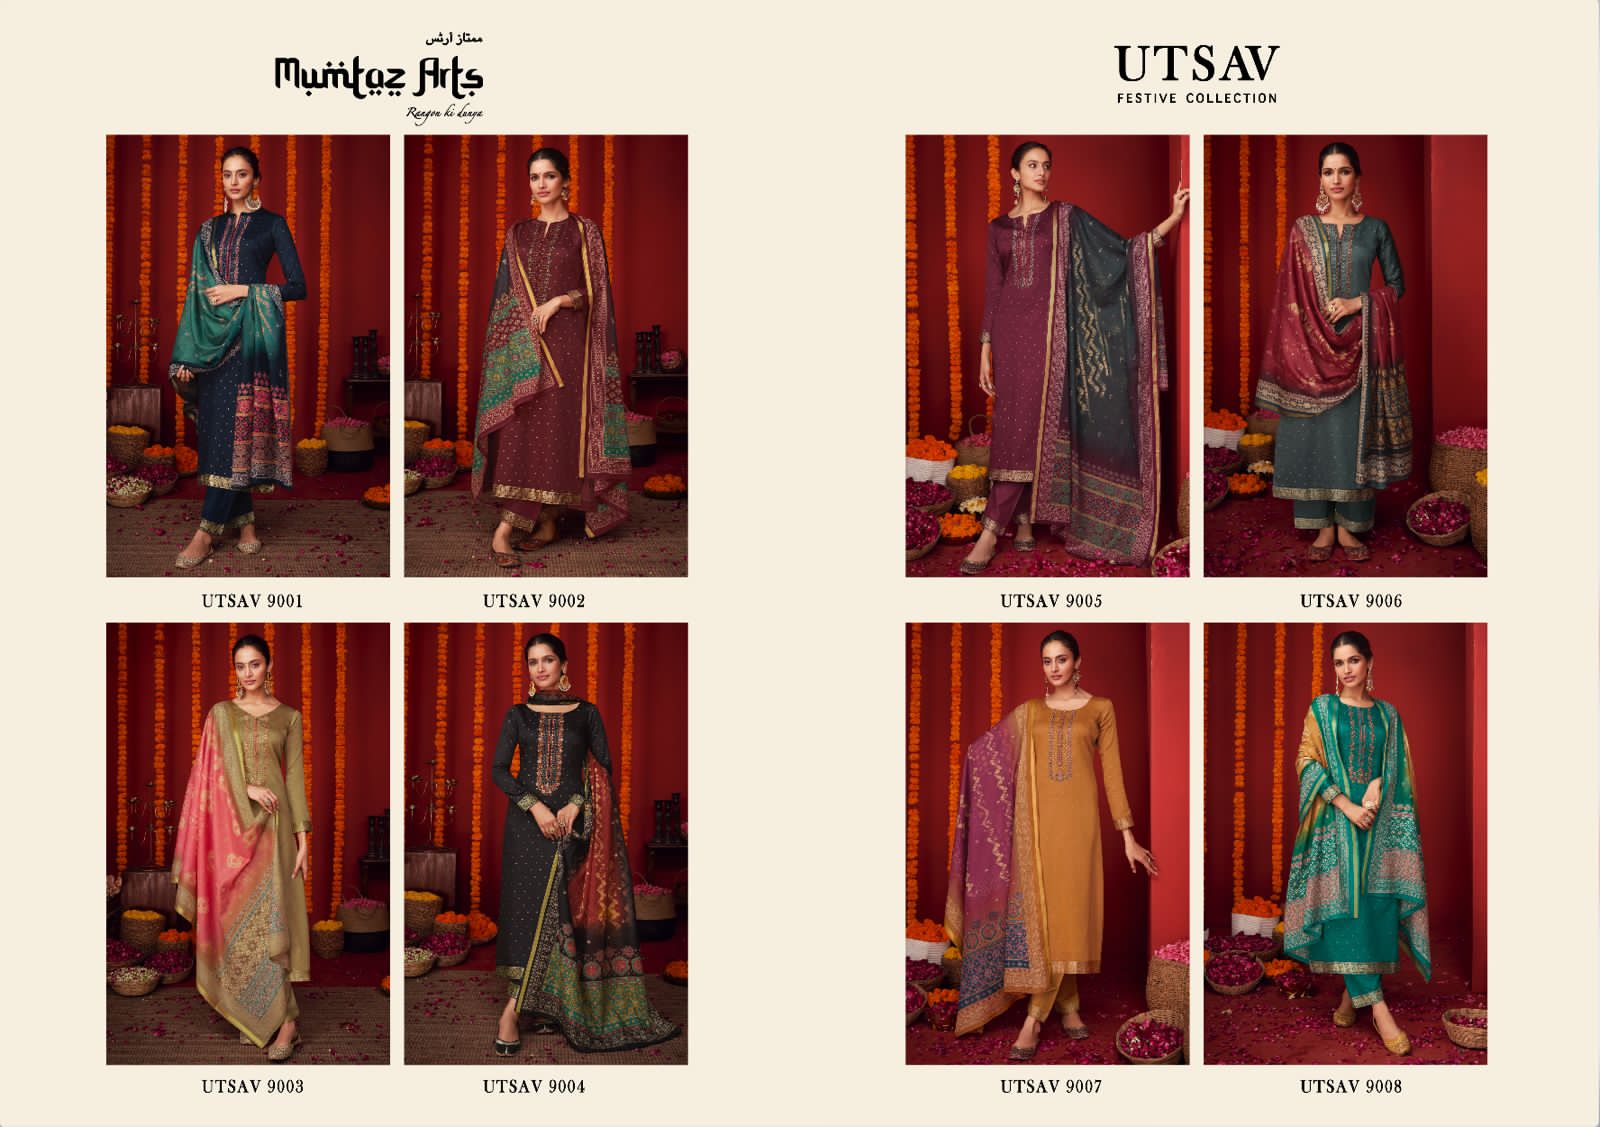 Mumtaz Utsav collection 1